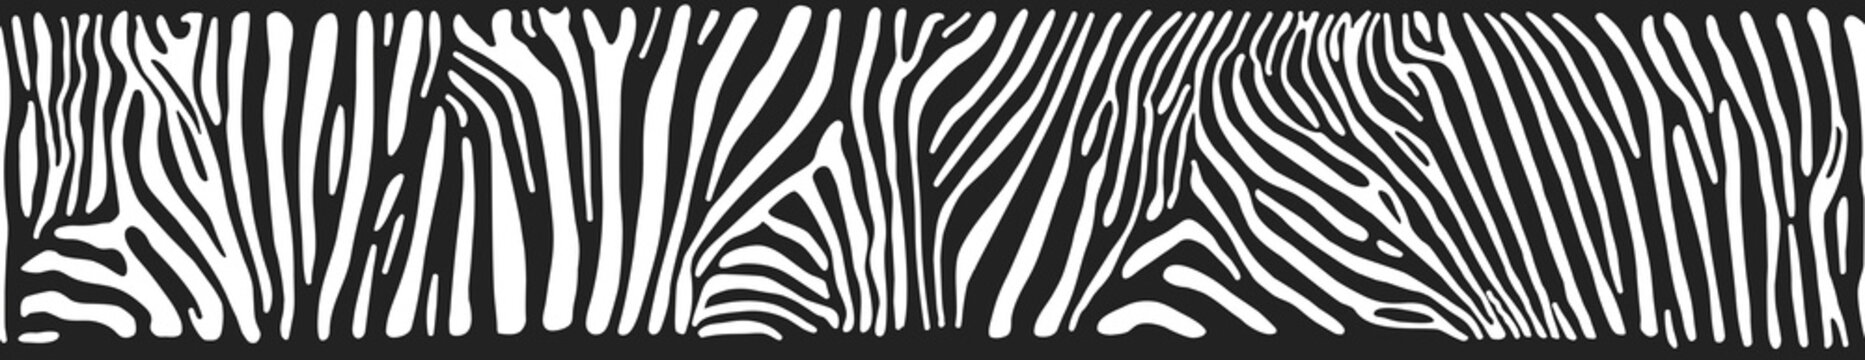 Vector background with zebra skin